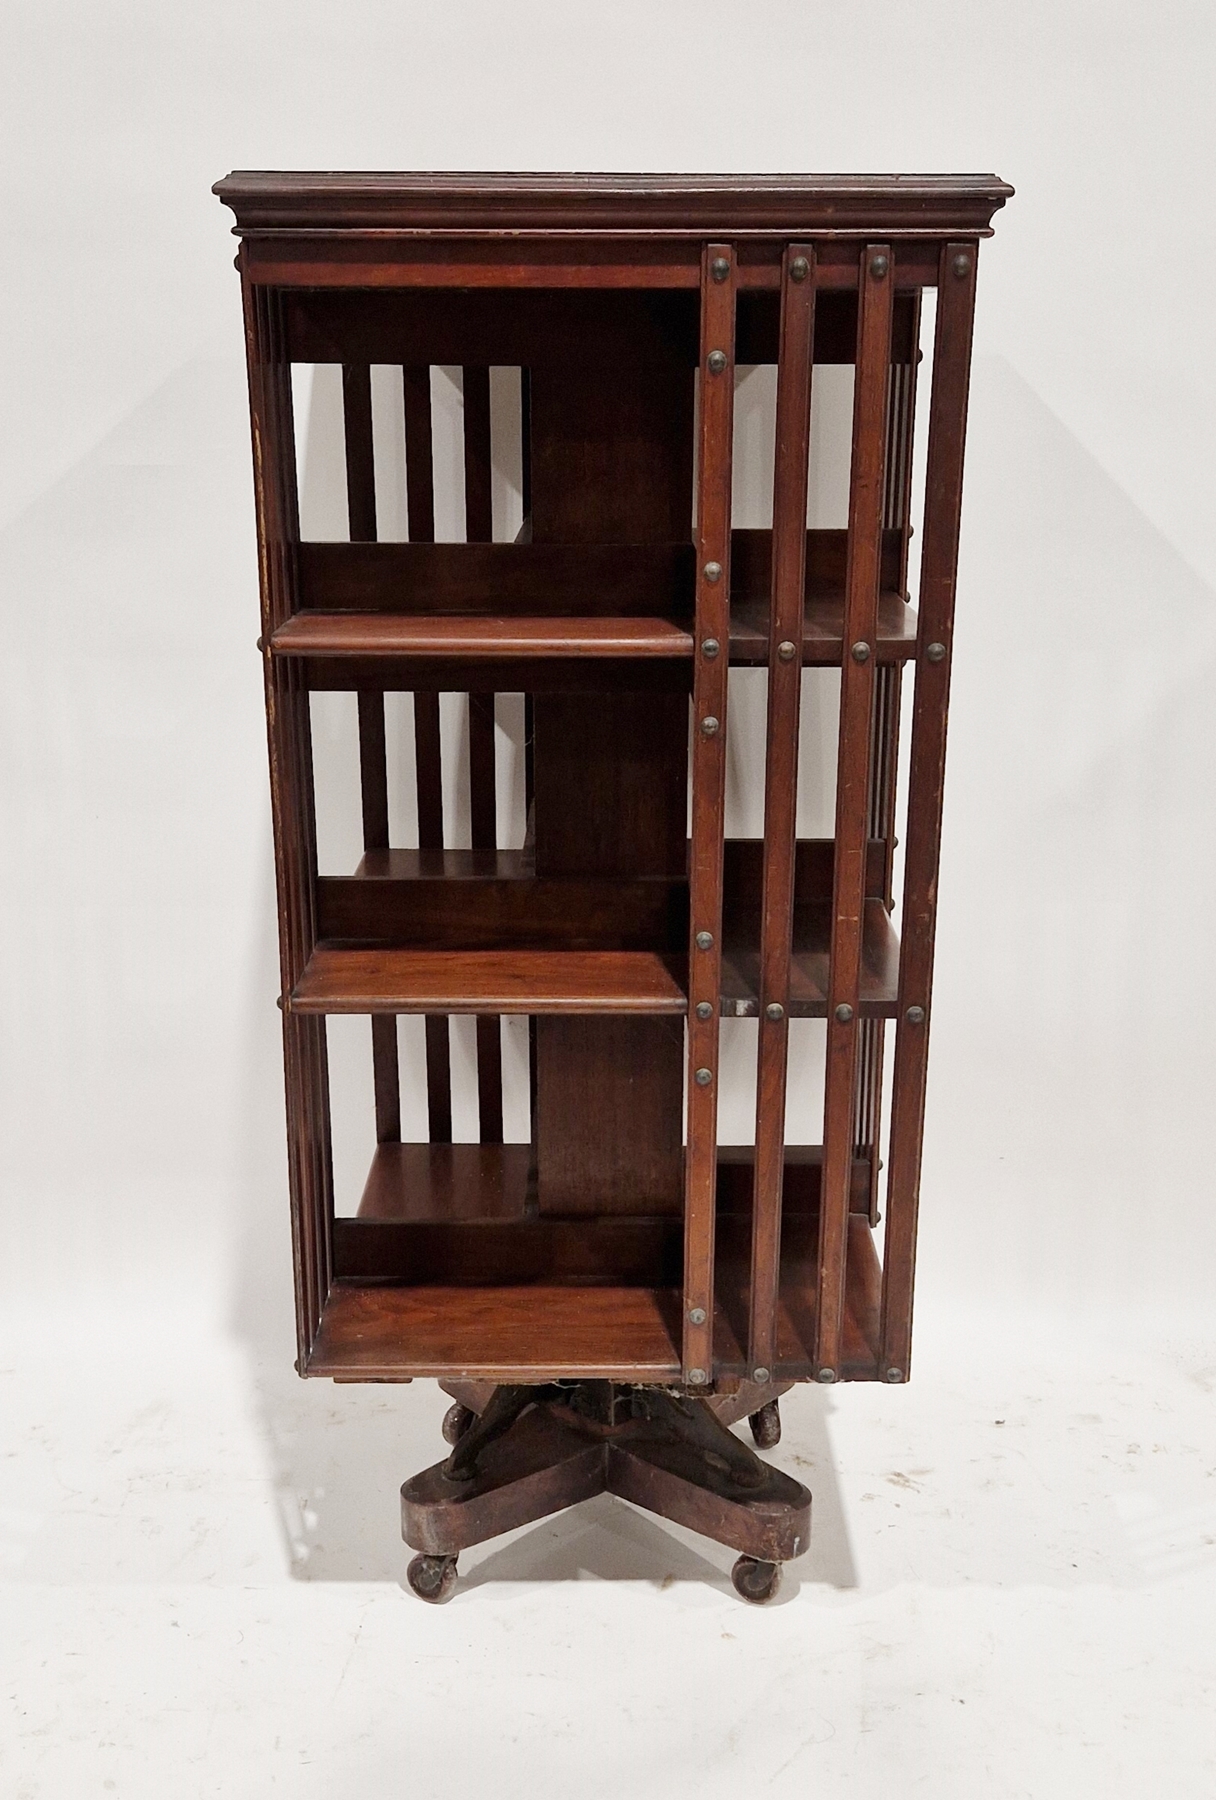 Early 20th century mahogany revolving bookcase, three tier, on castors, 110cm high x 50cm wide x